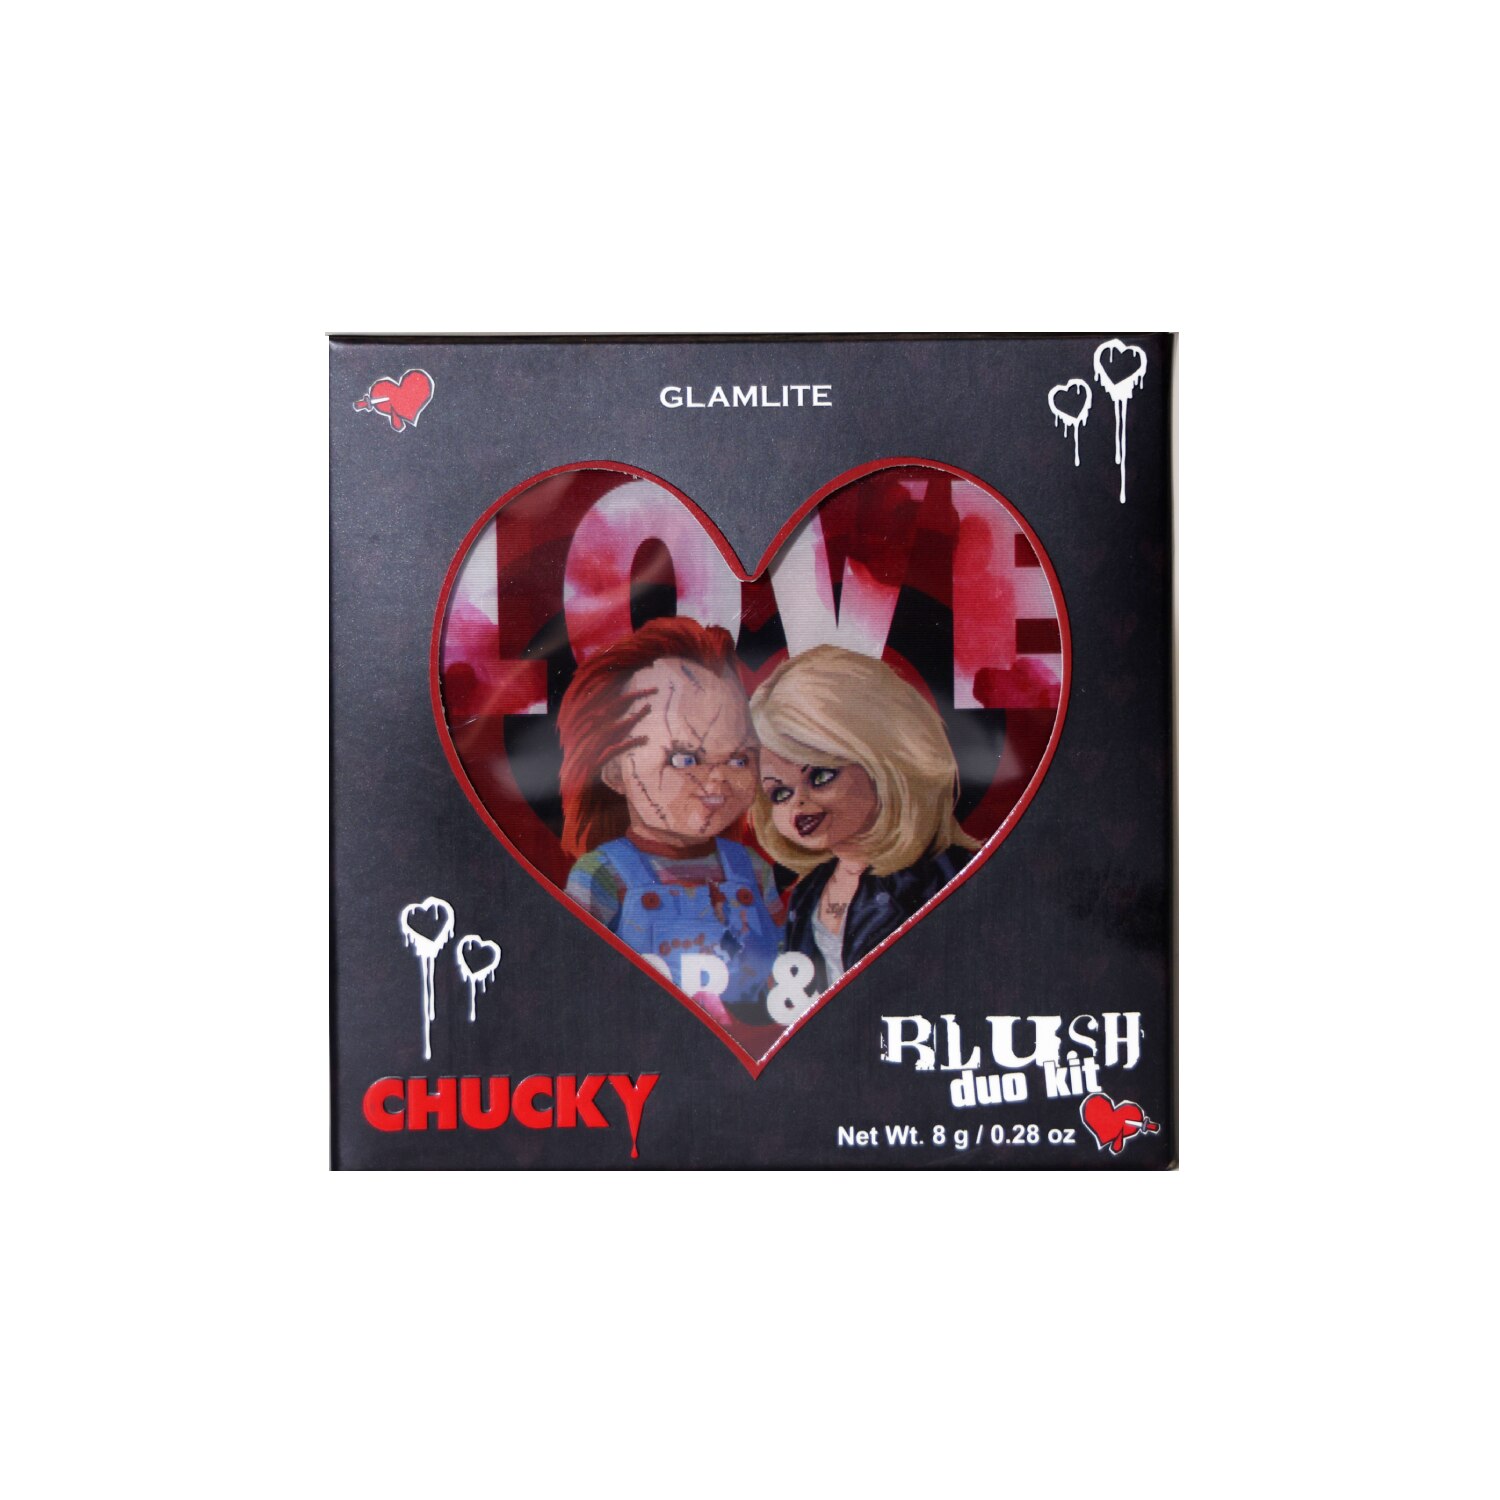 Chucky x Glamlite Blush Duo